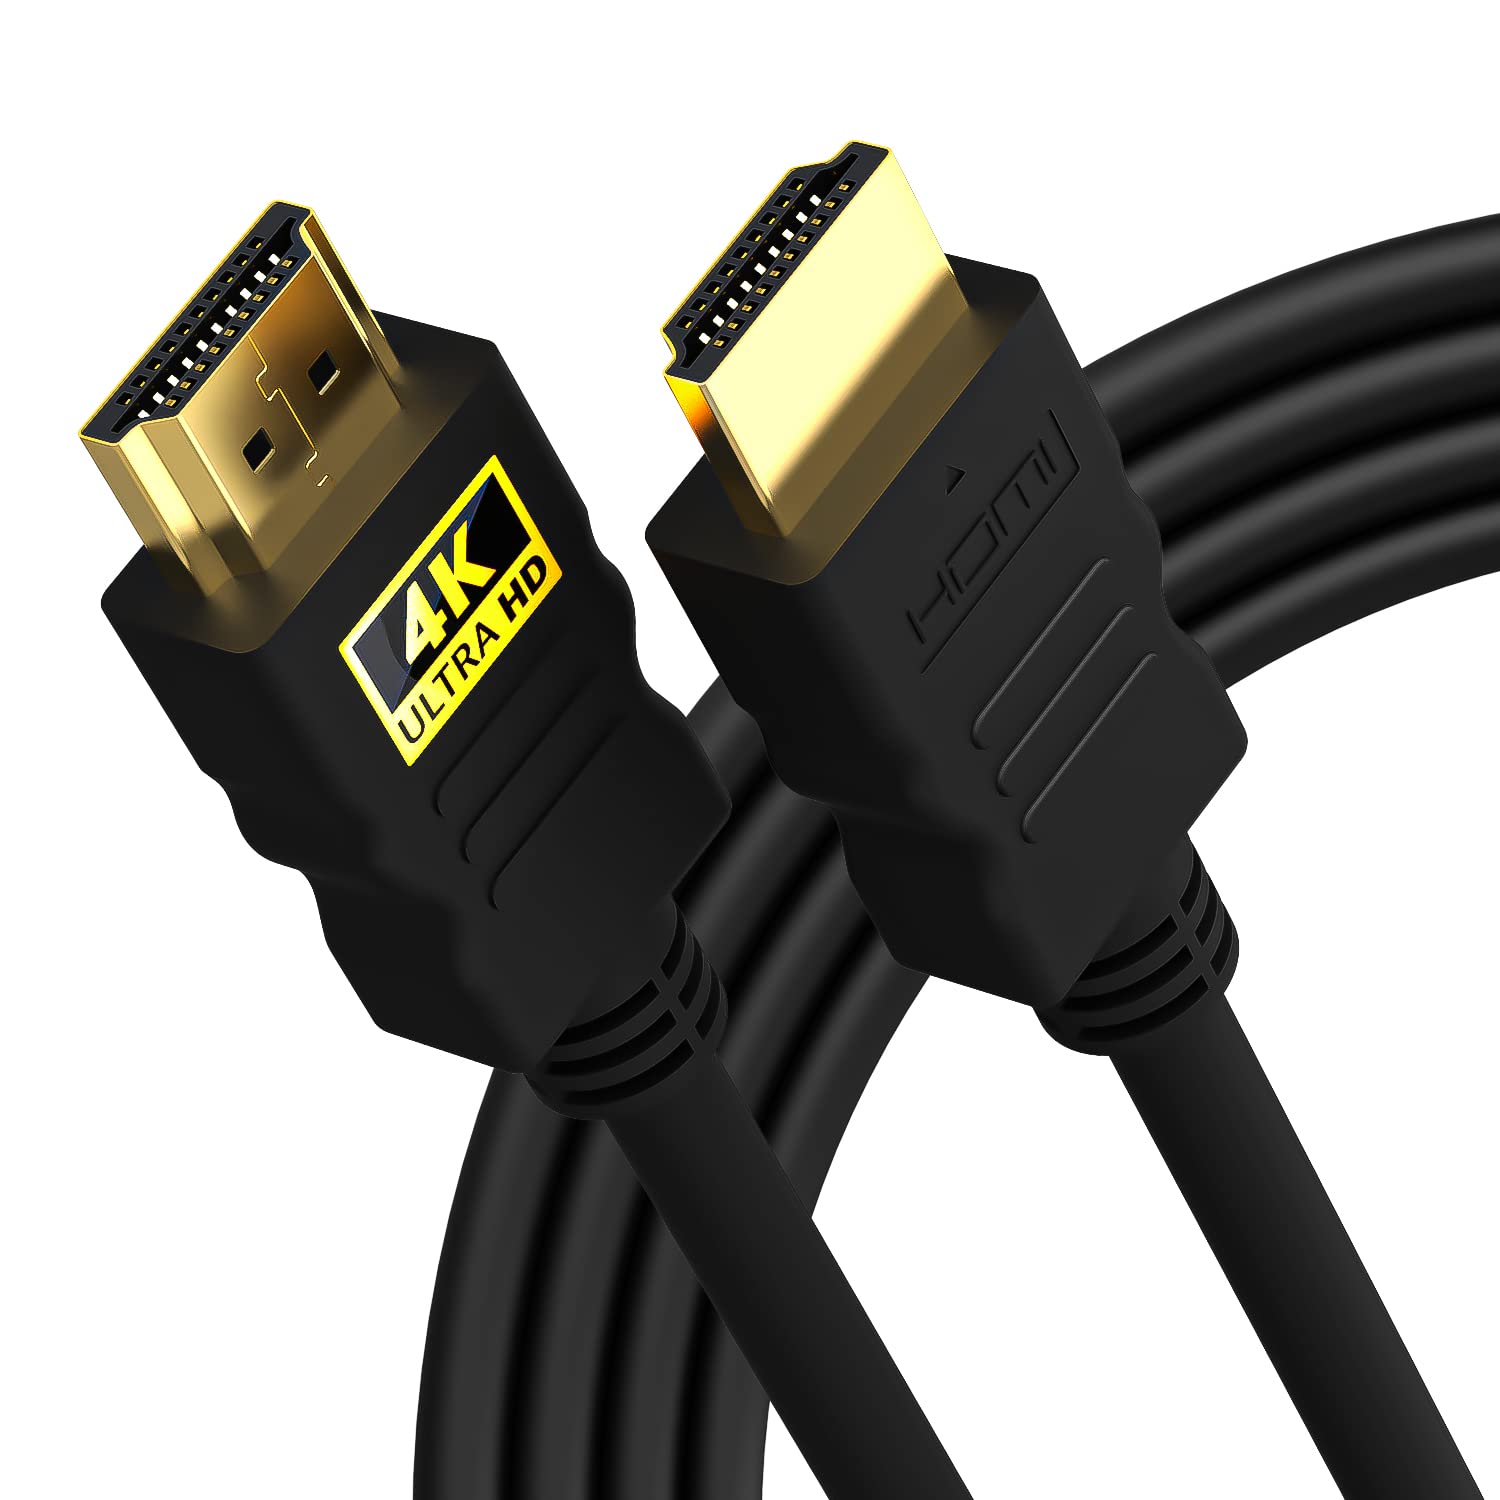 4K HDMI cables (are nonsense) - CNET